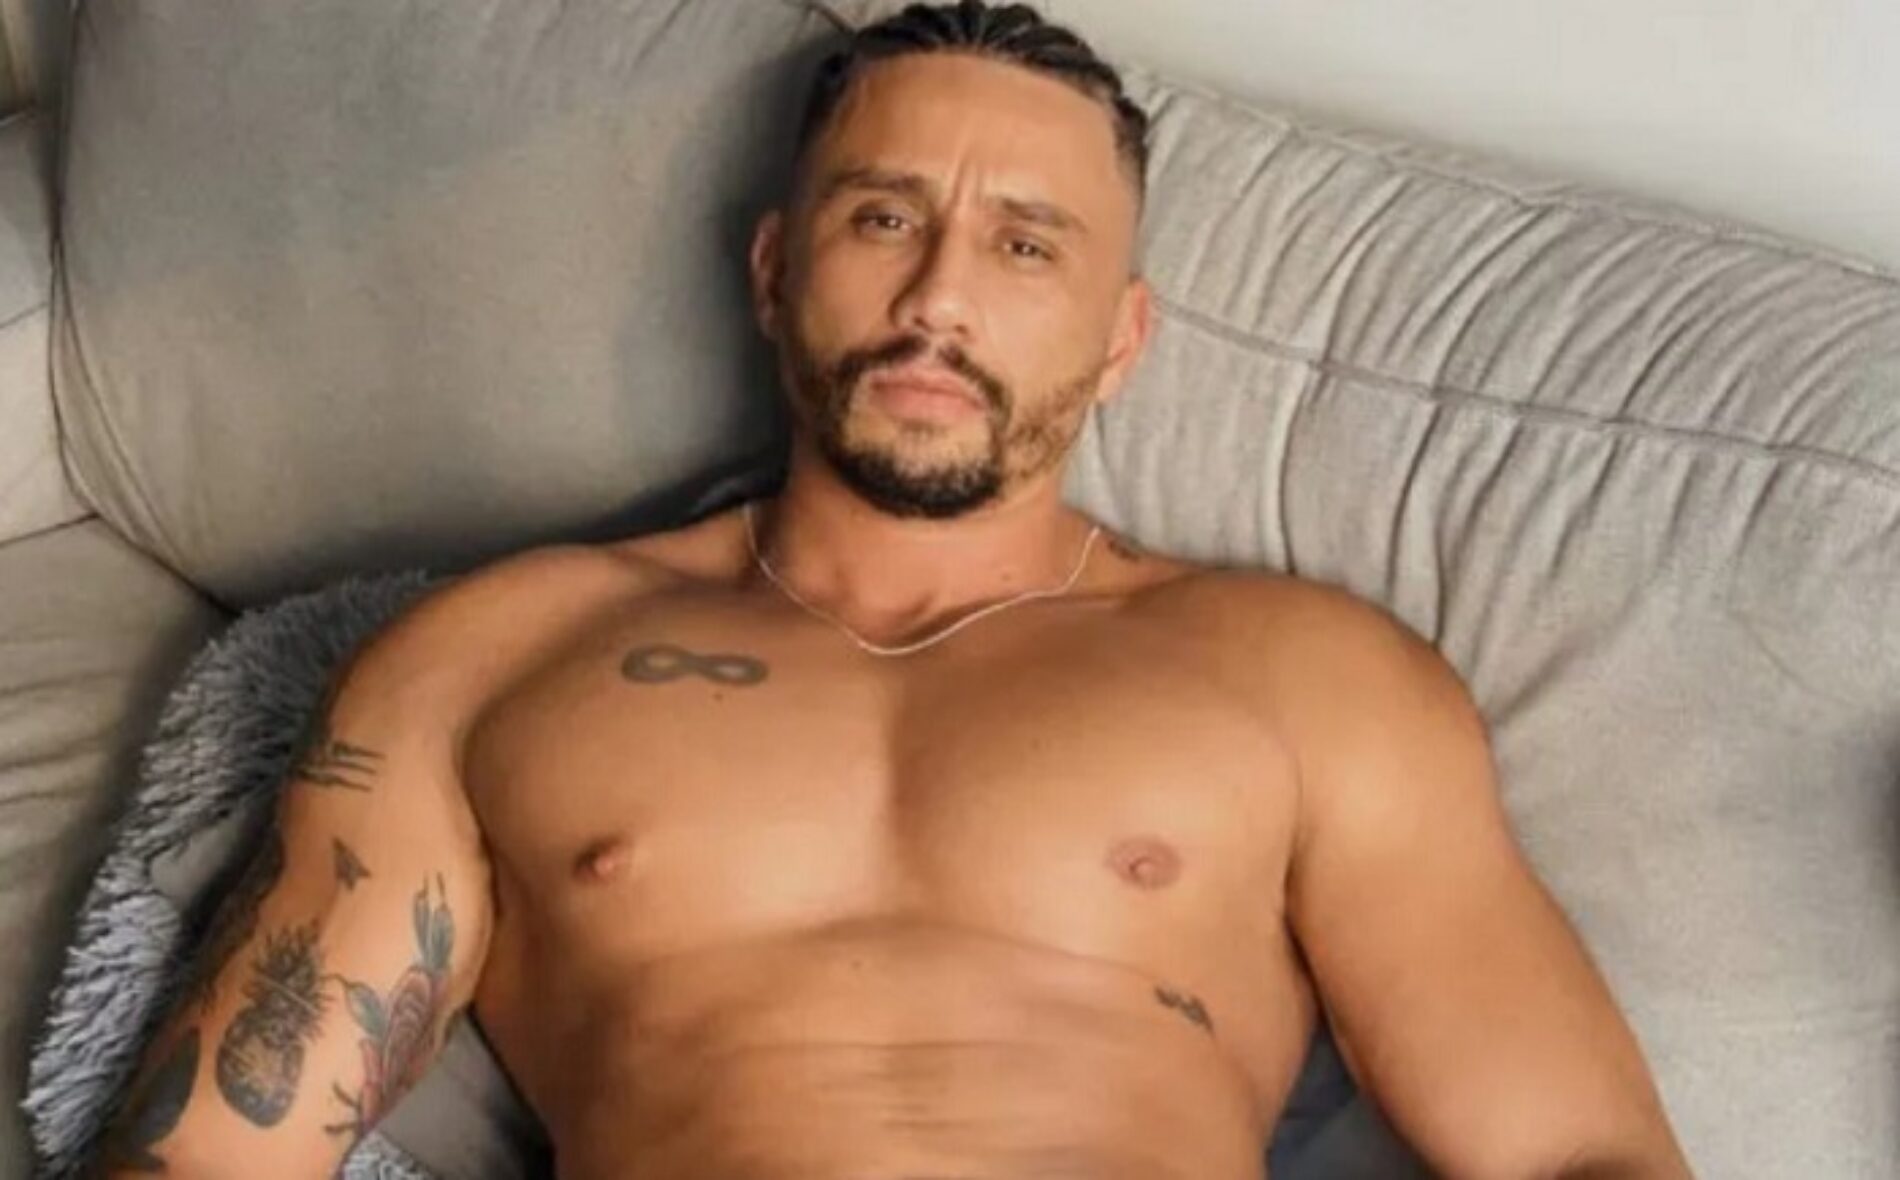 Internet Porn Star Fabricio Da Silva Claudino Arrested For Secretly Filming and Posting Video Of Boyfriend On OnlyFans